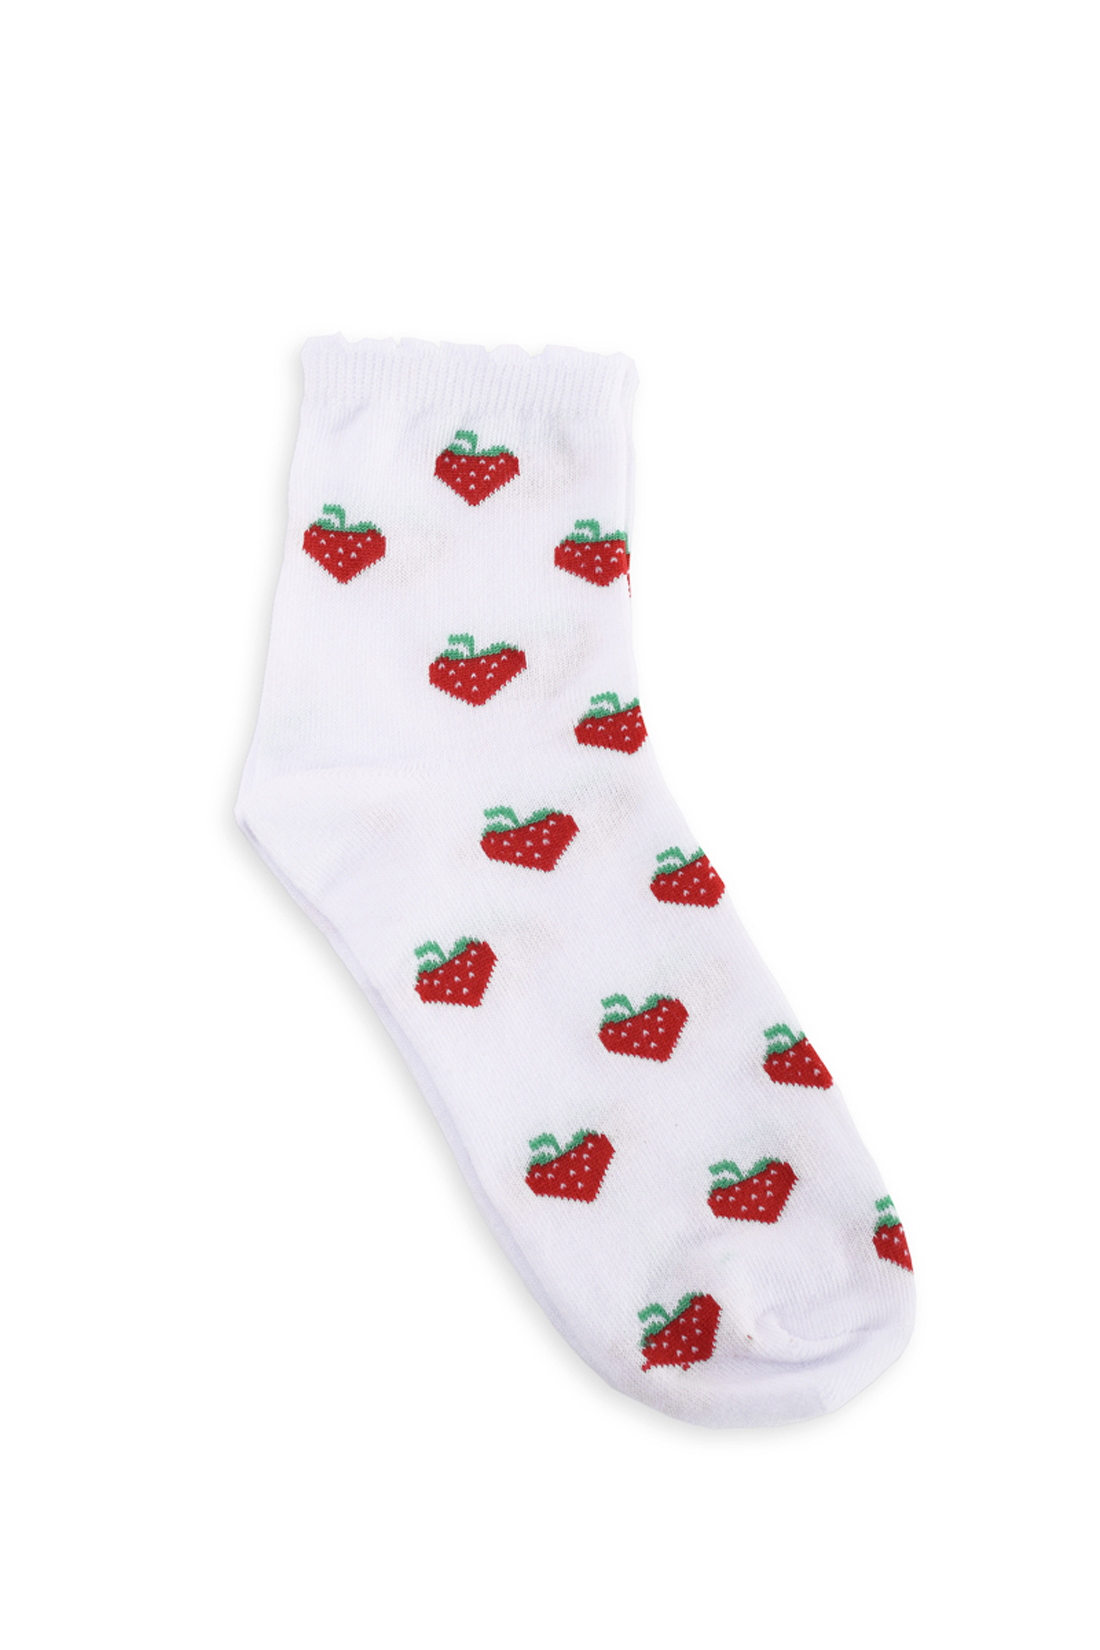 Носки с ягодами (арт. baon B399010), размер 35/37, цвет белый